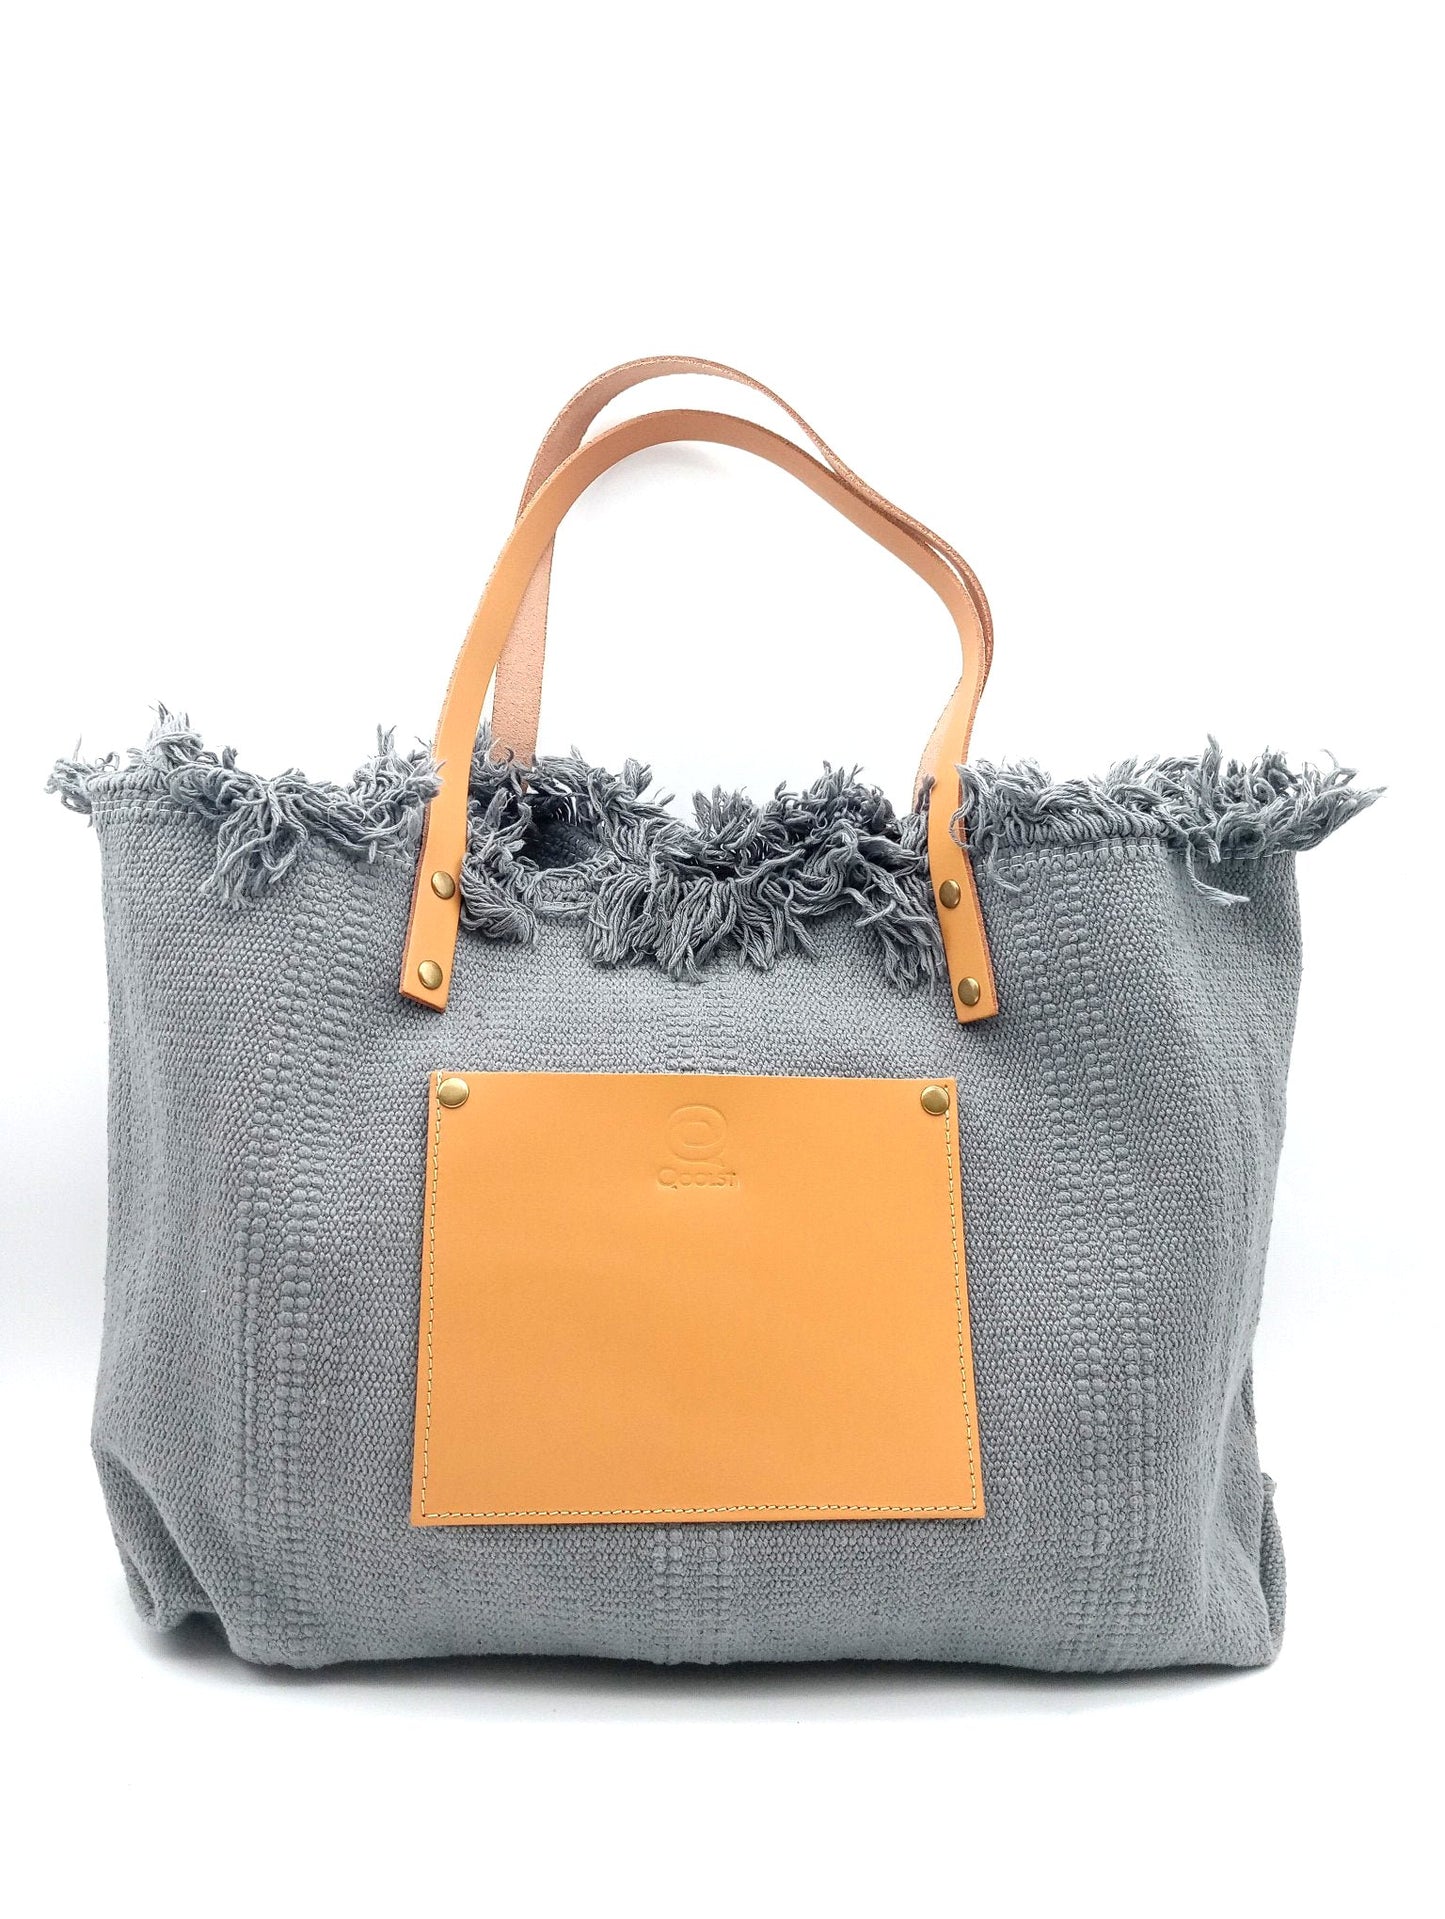 Women's Cotton Shoulder and Handbag Qoolst Shopper with Leather Pocket XL